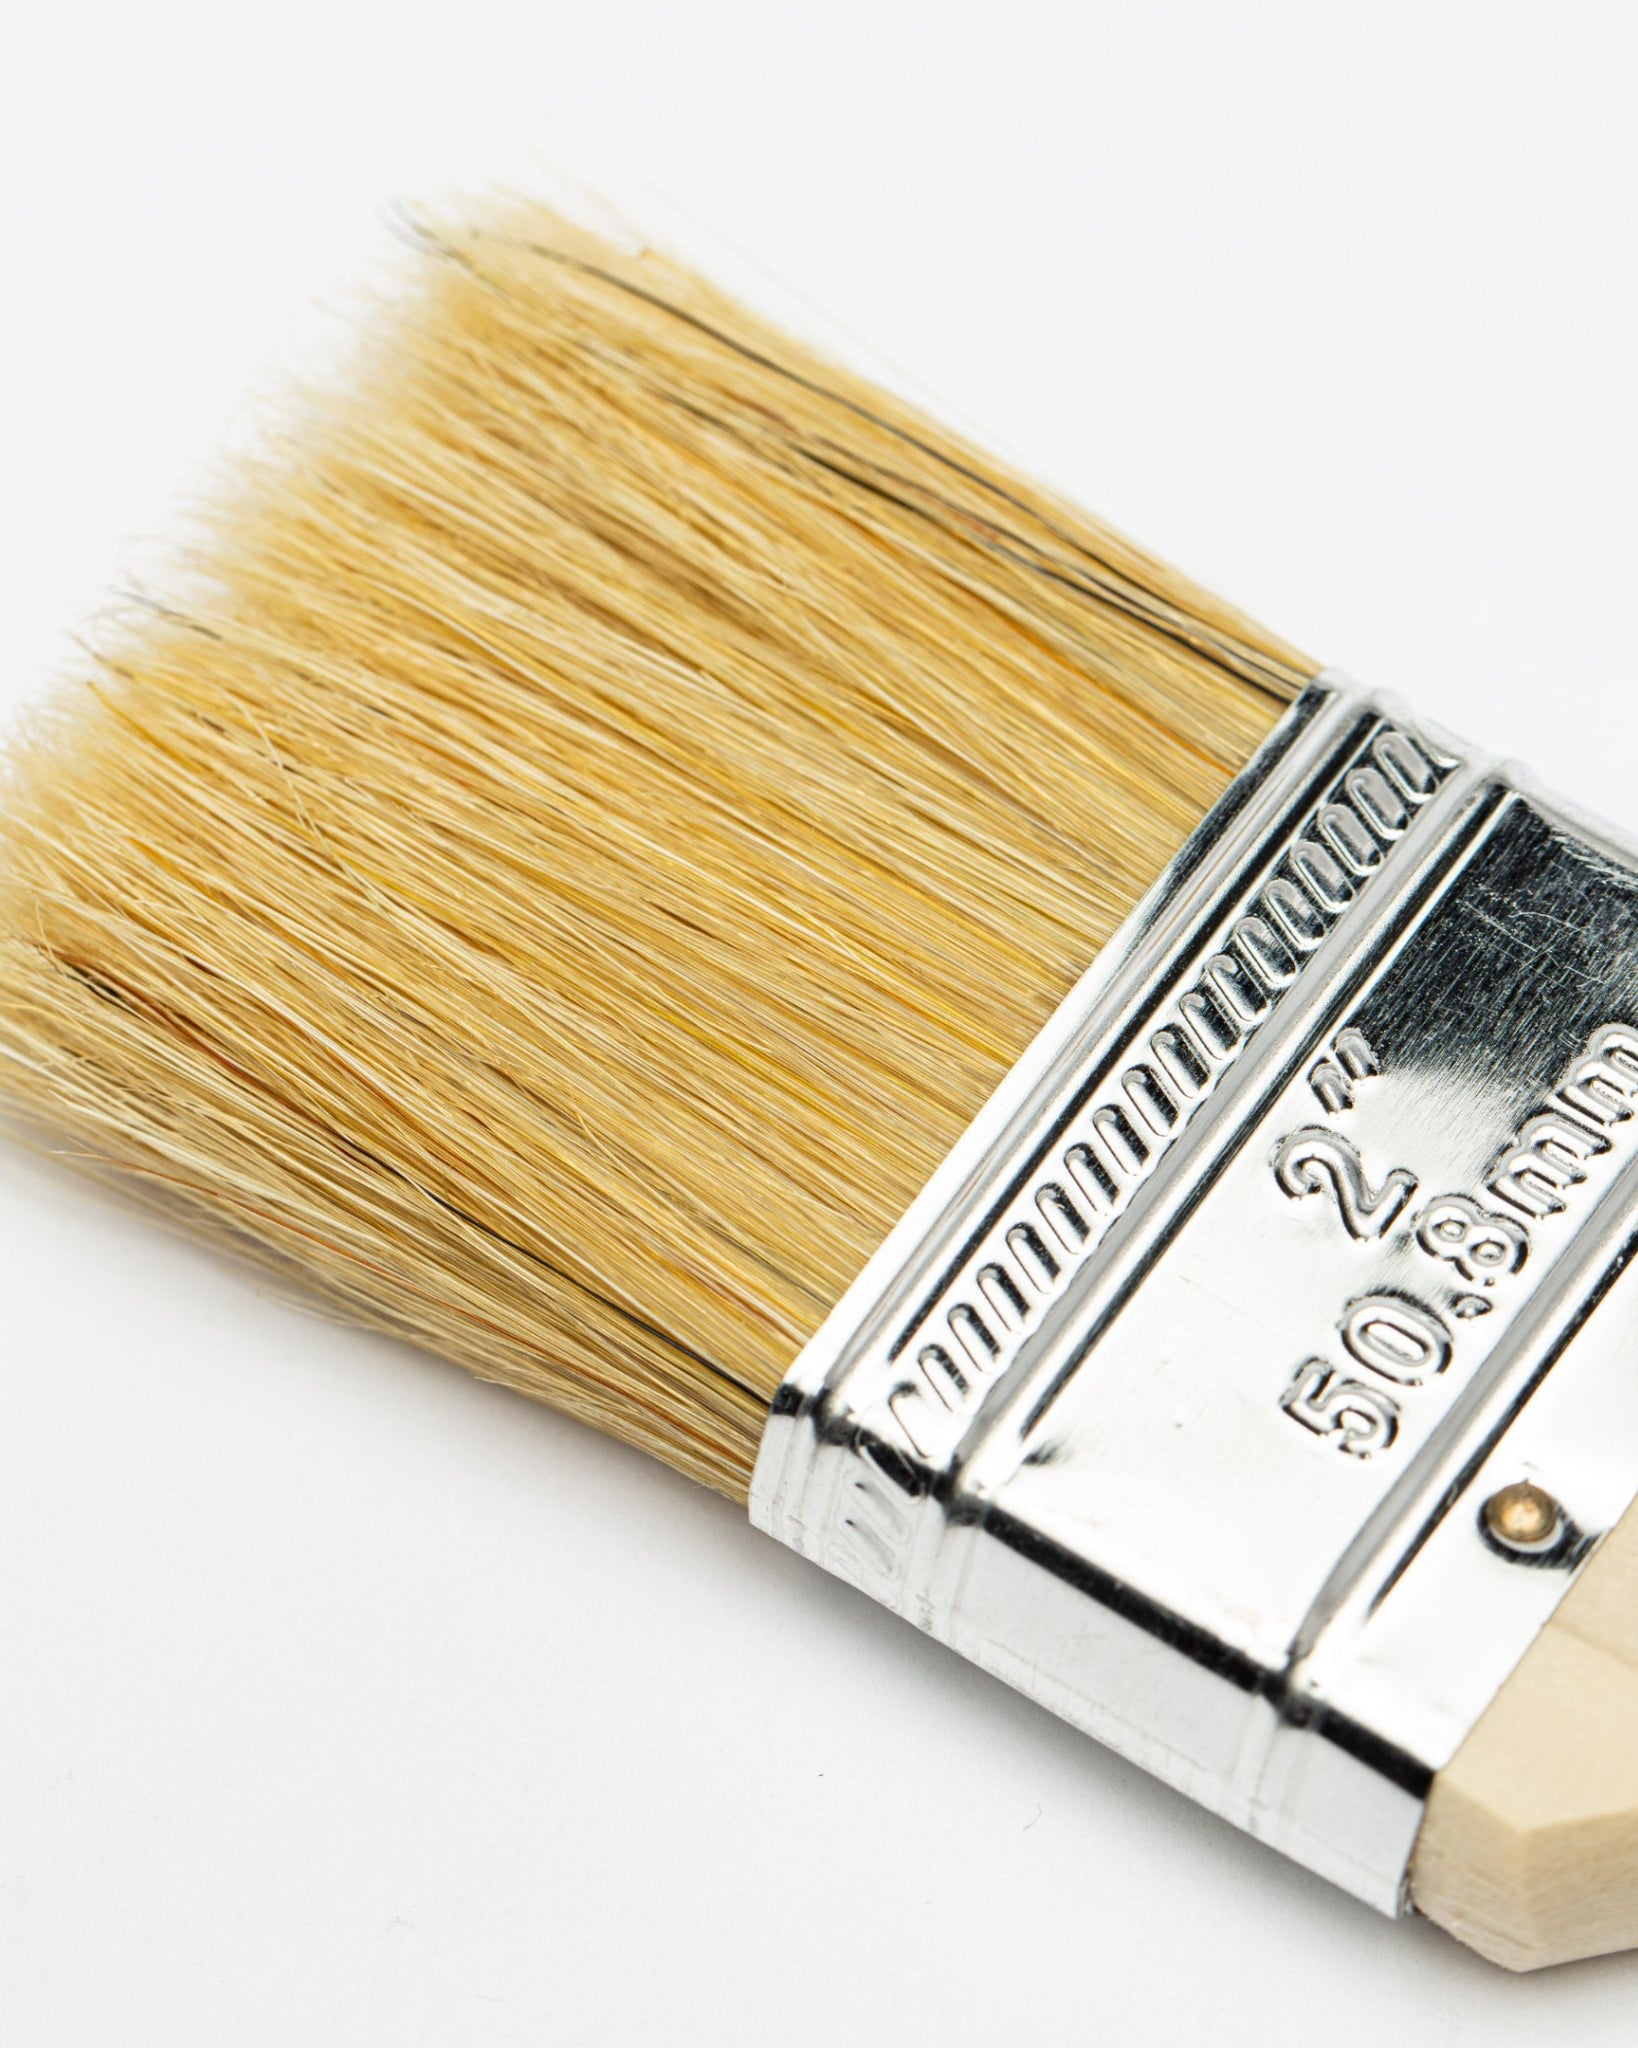 Starbond Natural Bristles Wood Stain Brush, 2 inches | Adhesive | Starbond